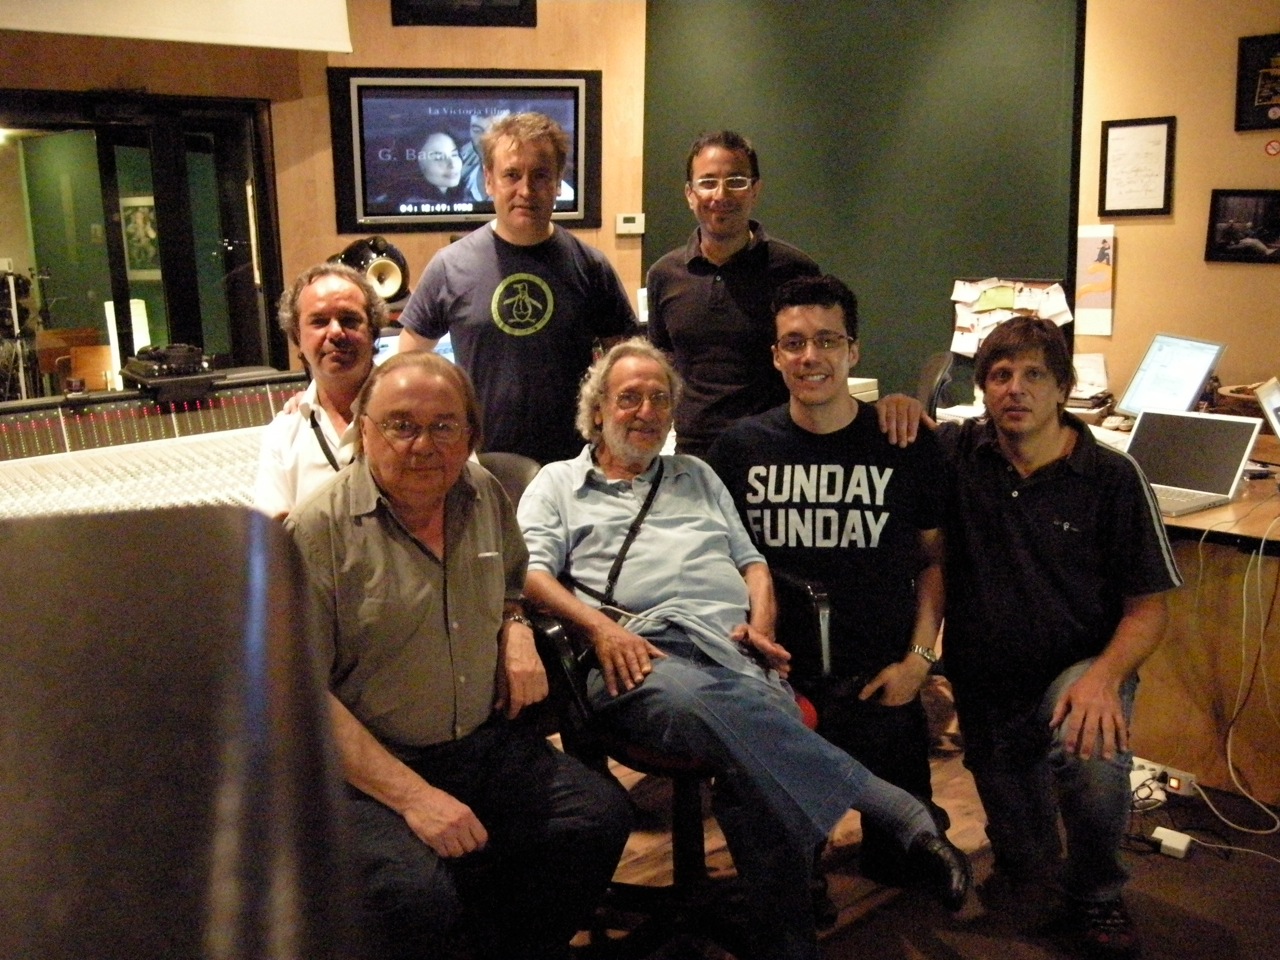 David Franco, Giovanni Bacalov, Luis Bacalov, Pepe Bojorquez, Antonio Ruiz, Geffredo Gibellini and Gianluca Porelli recording the music for Hidden Moon in Rome.